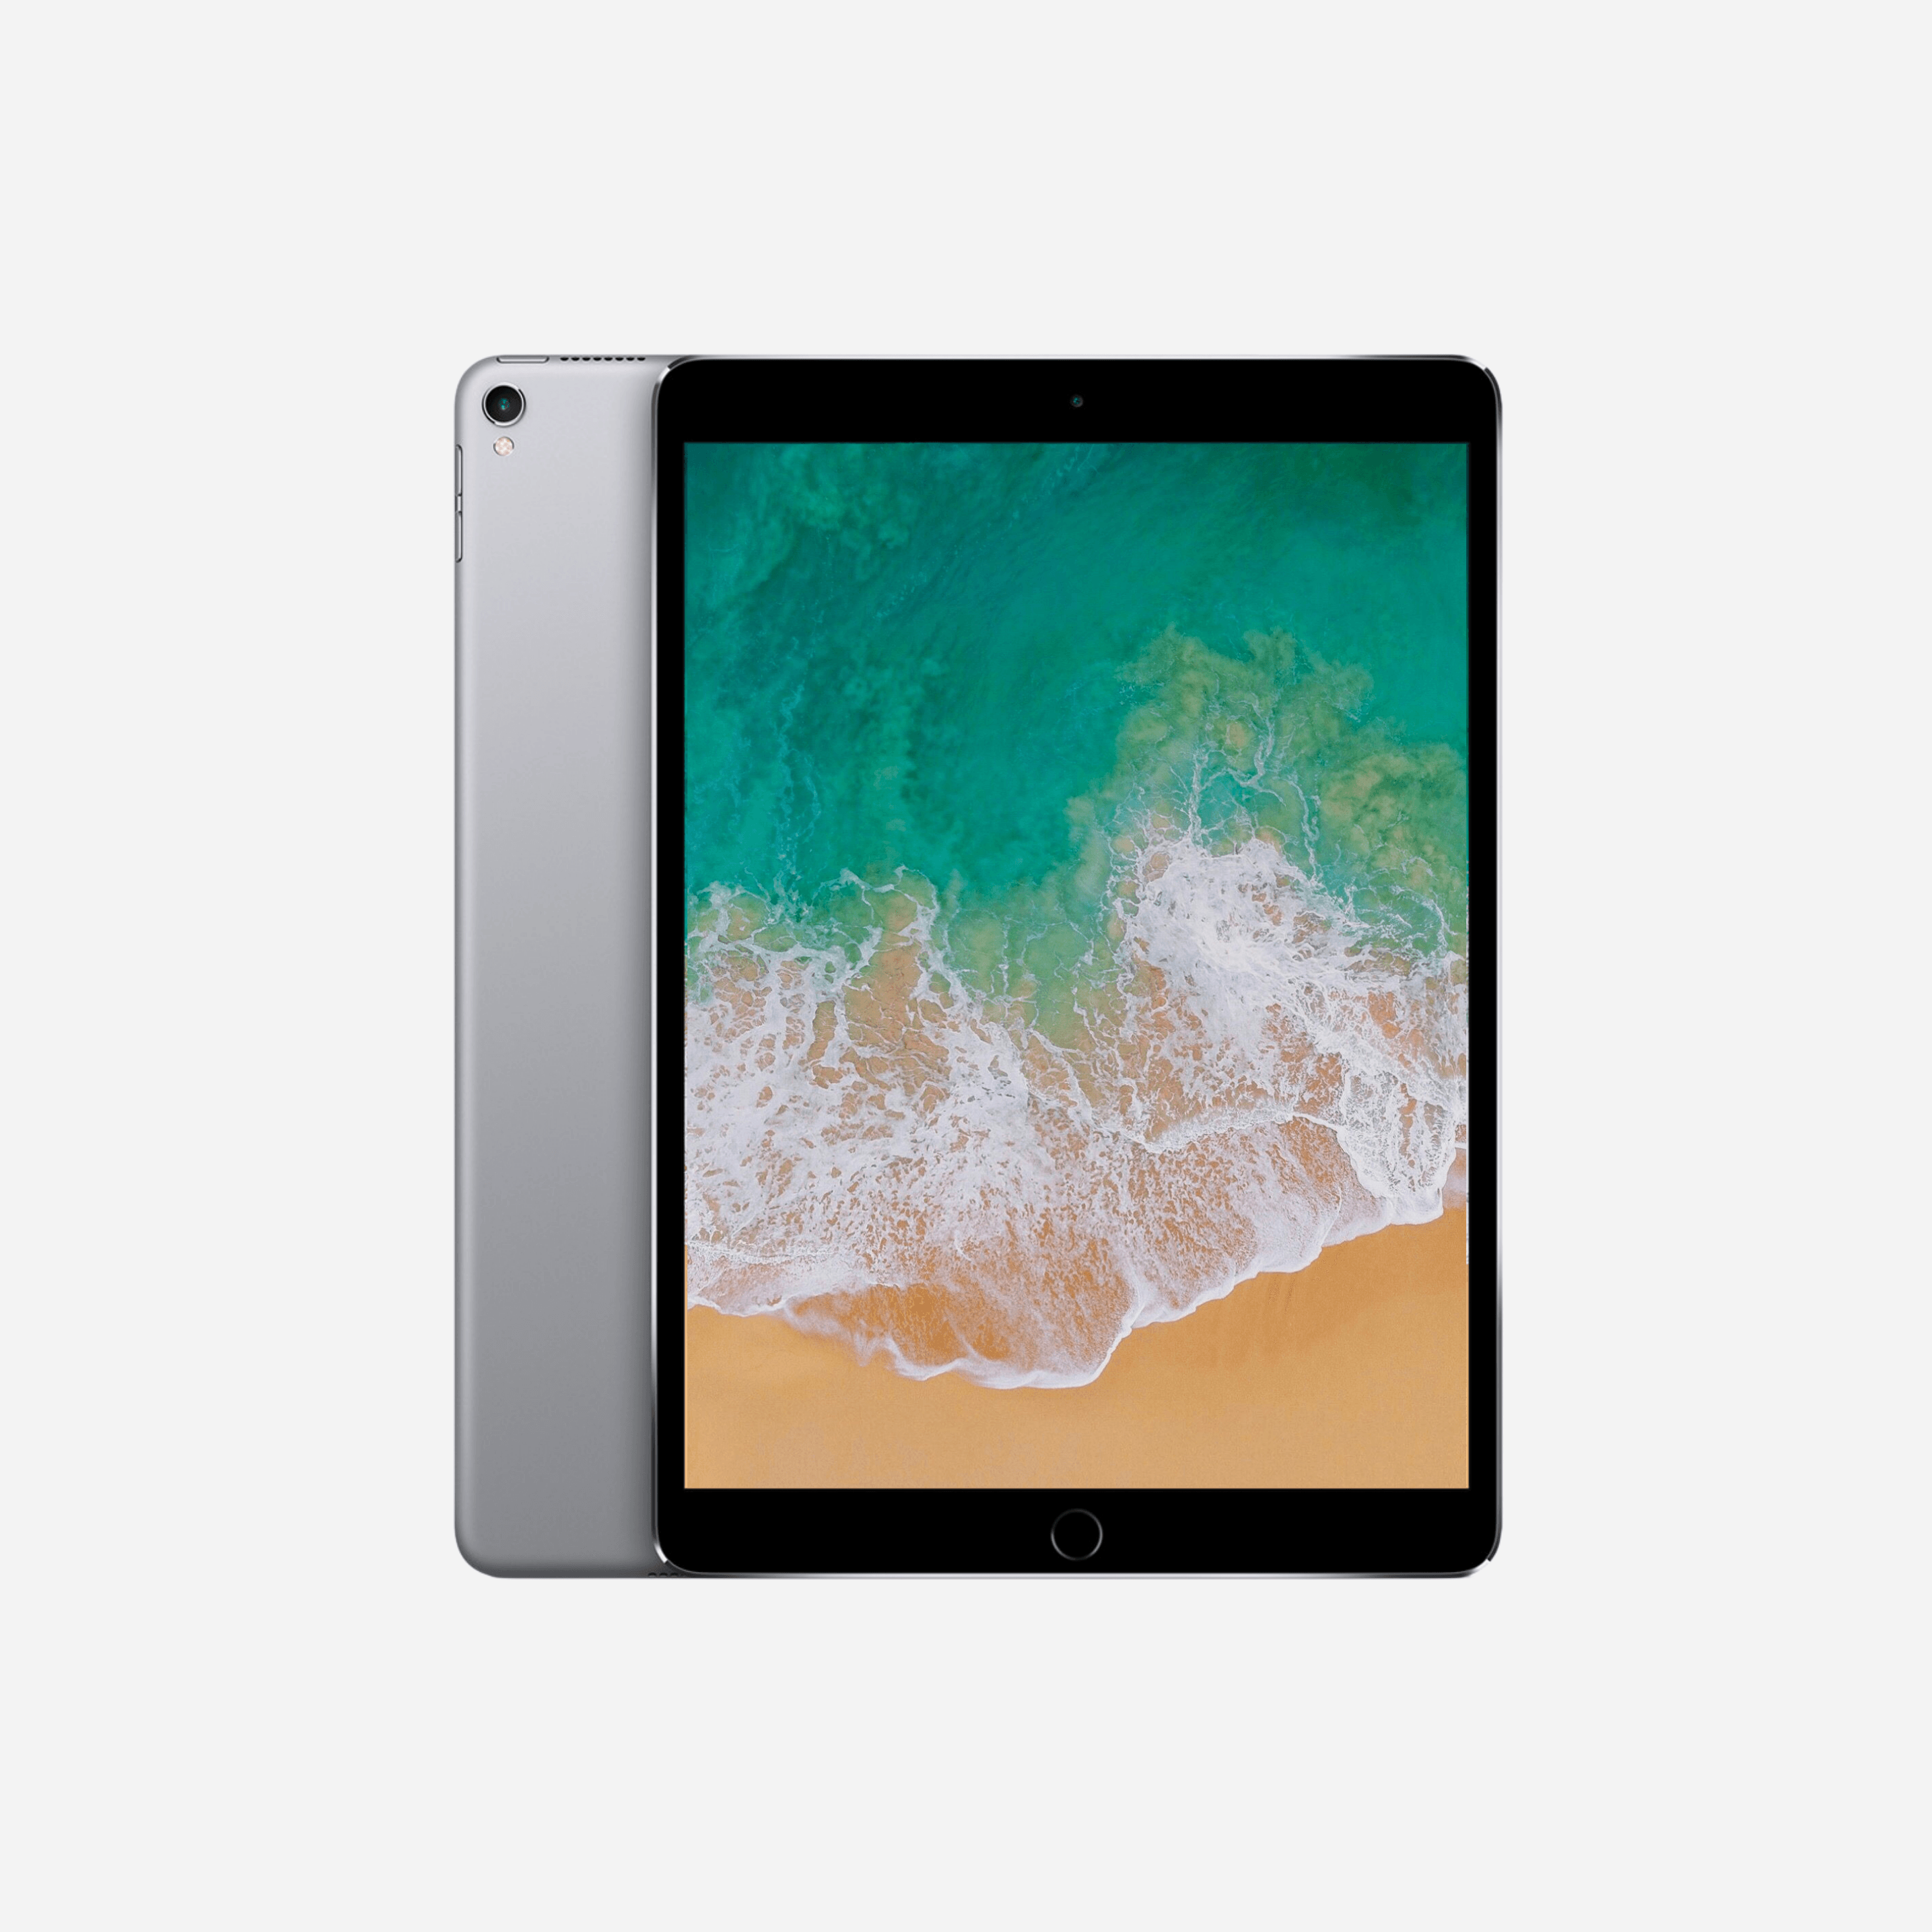 iPad Pro 10.5" | 2nd Gen (2017) - (Space Grey) - Refurb Me